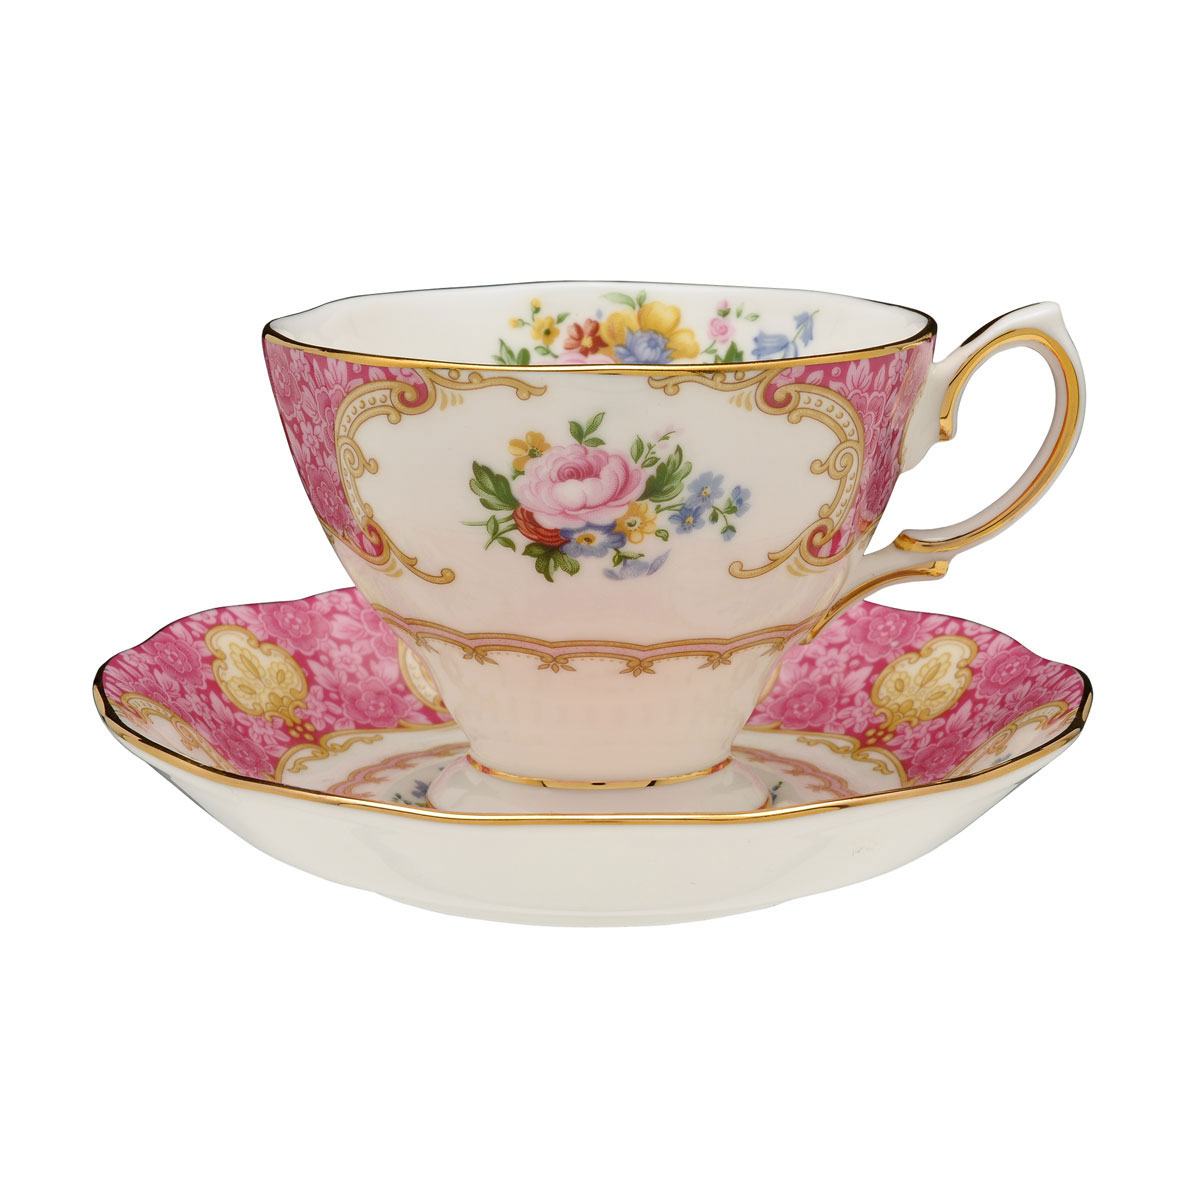 Royal Albert Lady Carlyle Teacup and Saucer Set